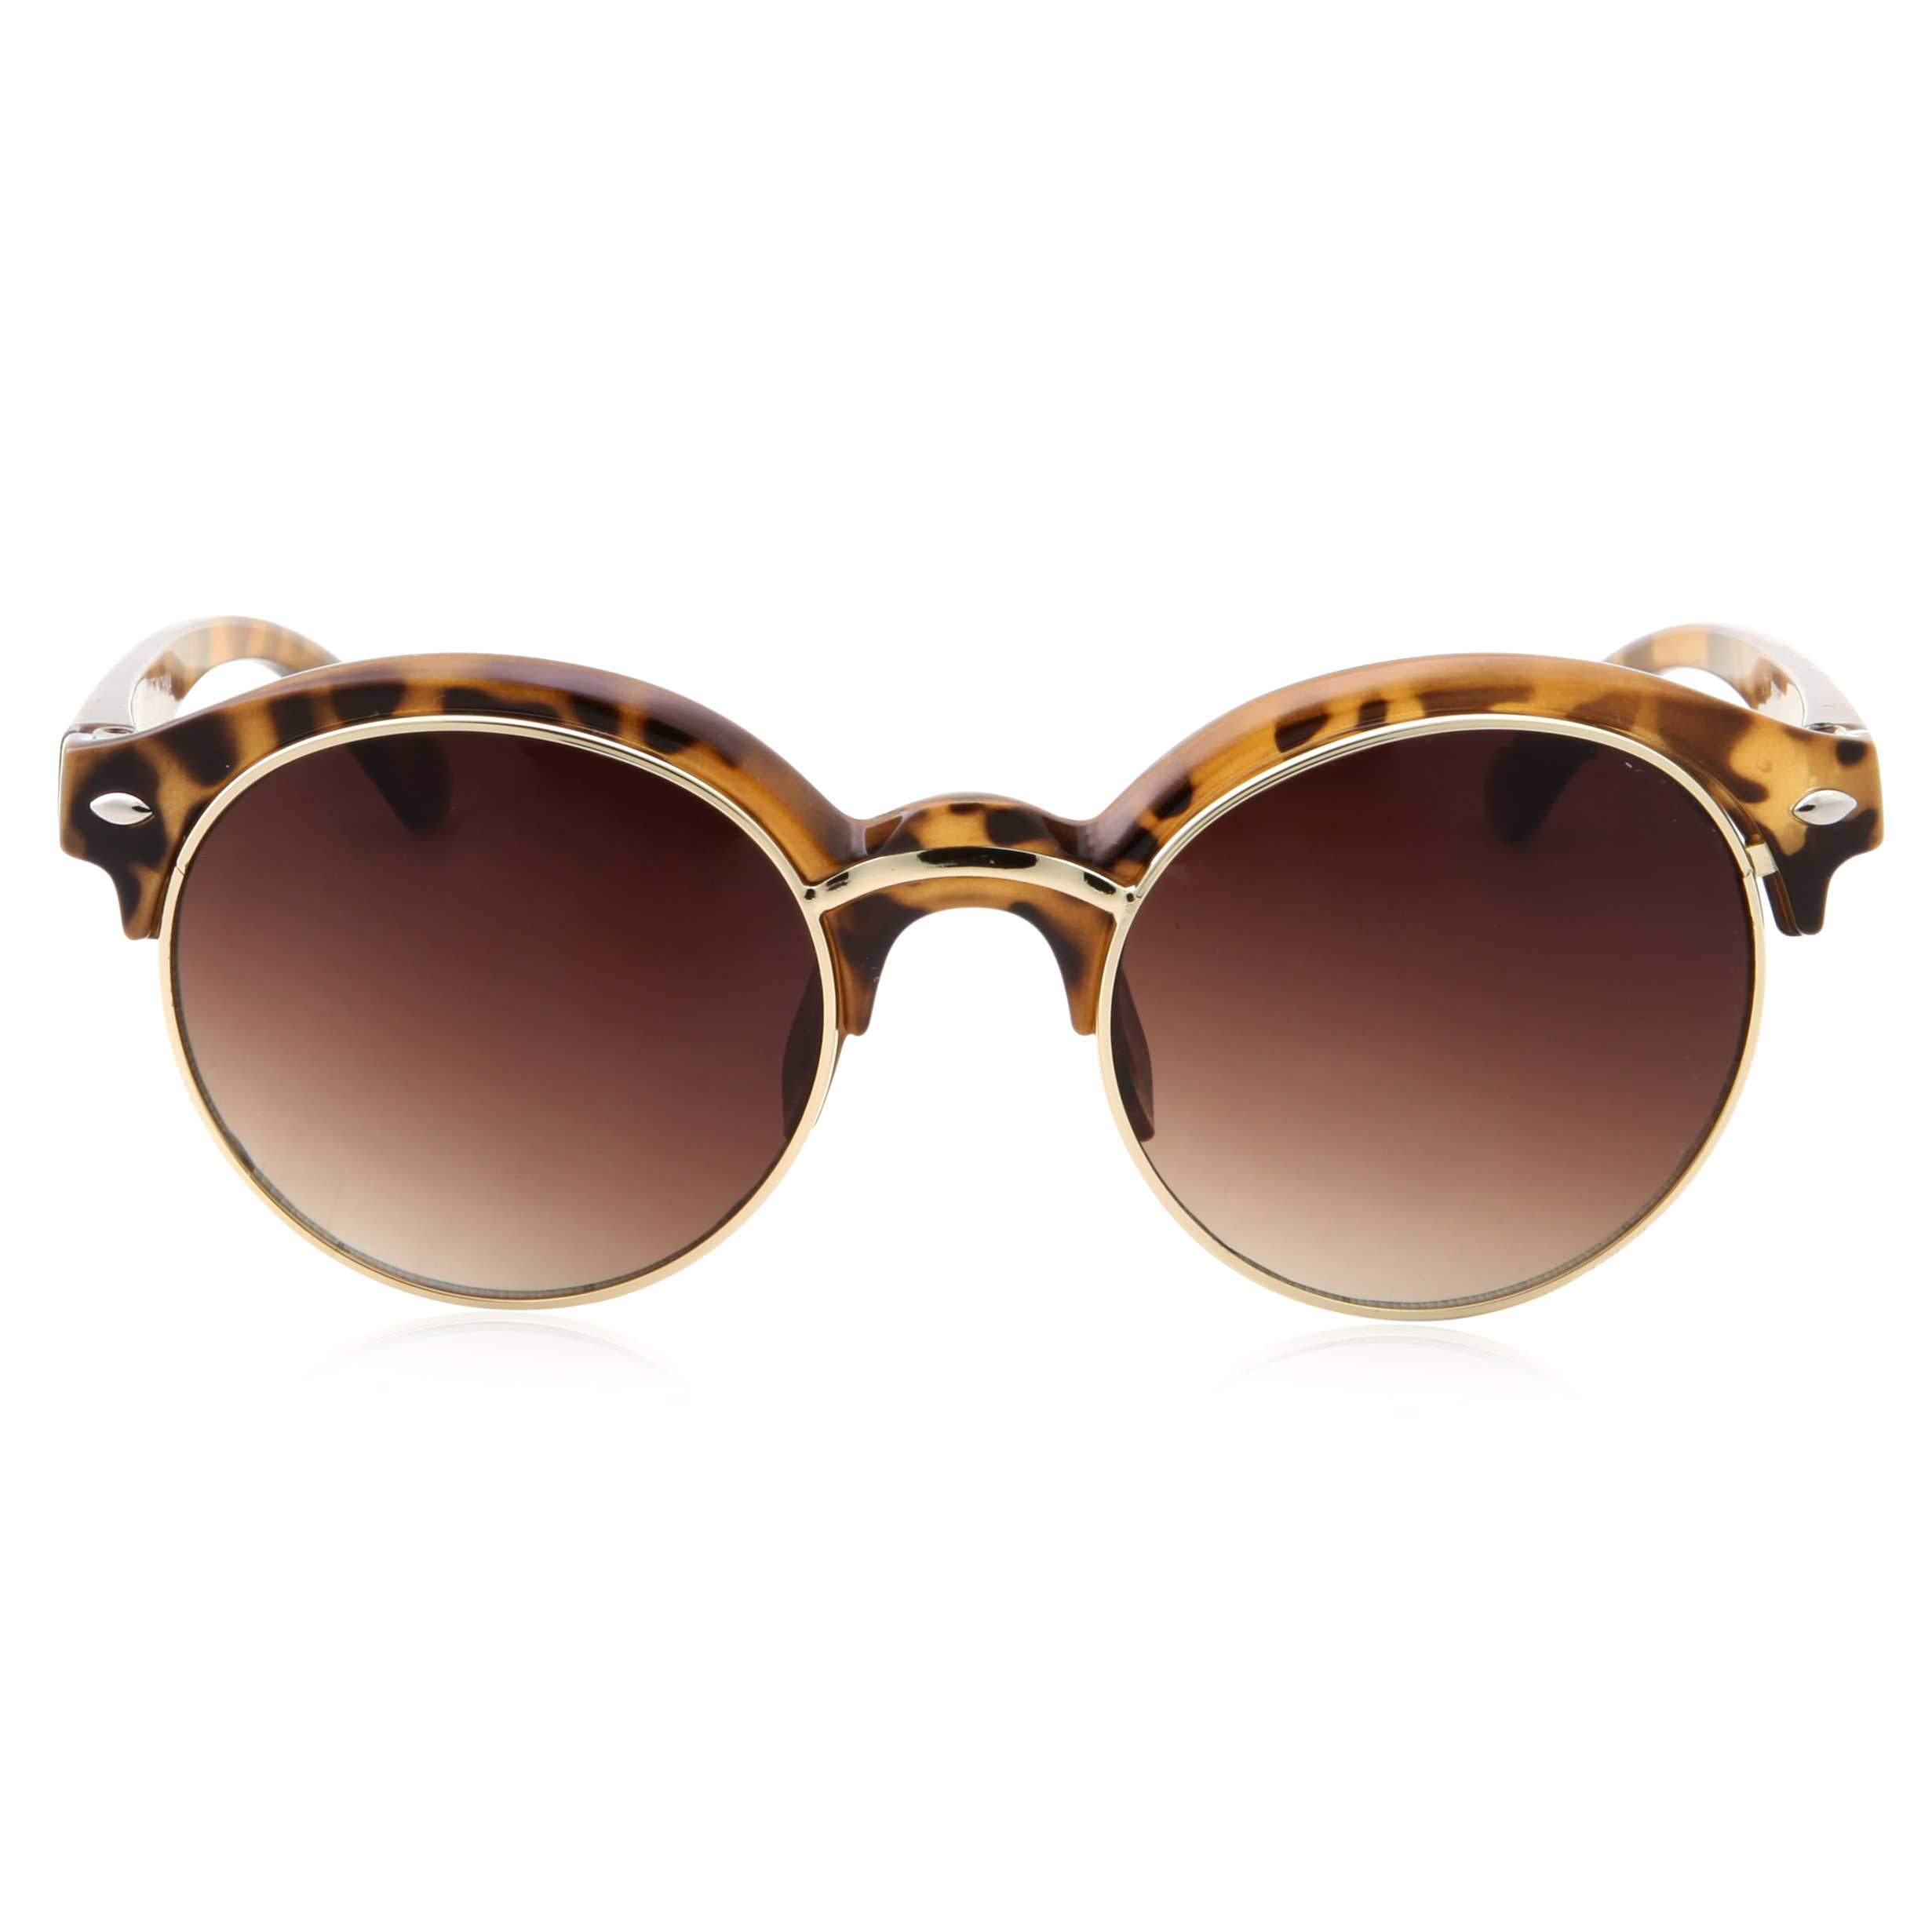 grinderPUNCH Classic Vintage Horned Rim Round Frame Adult Sunglasses for Men Women, Tortoise - image 3 of 5